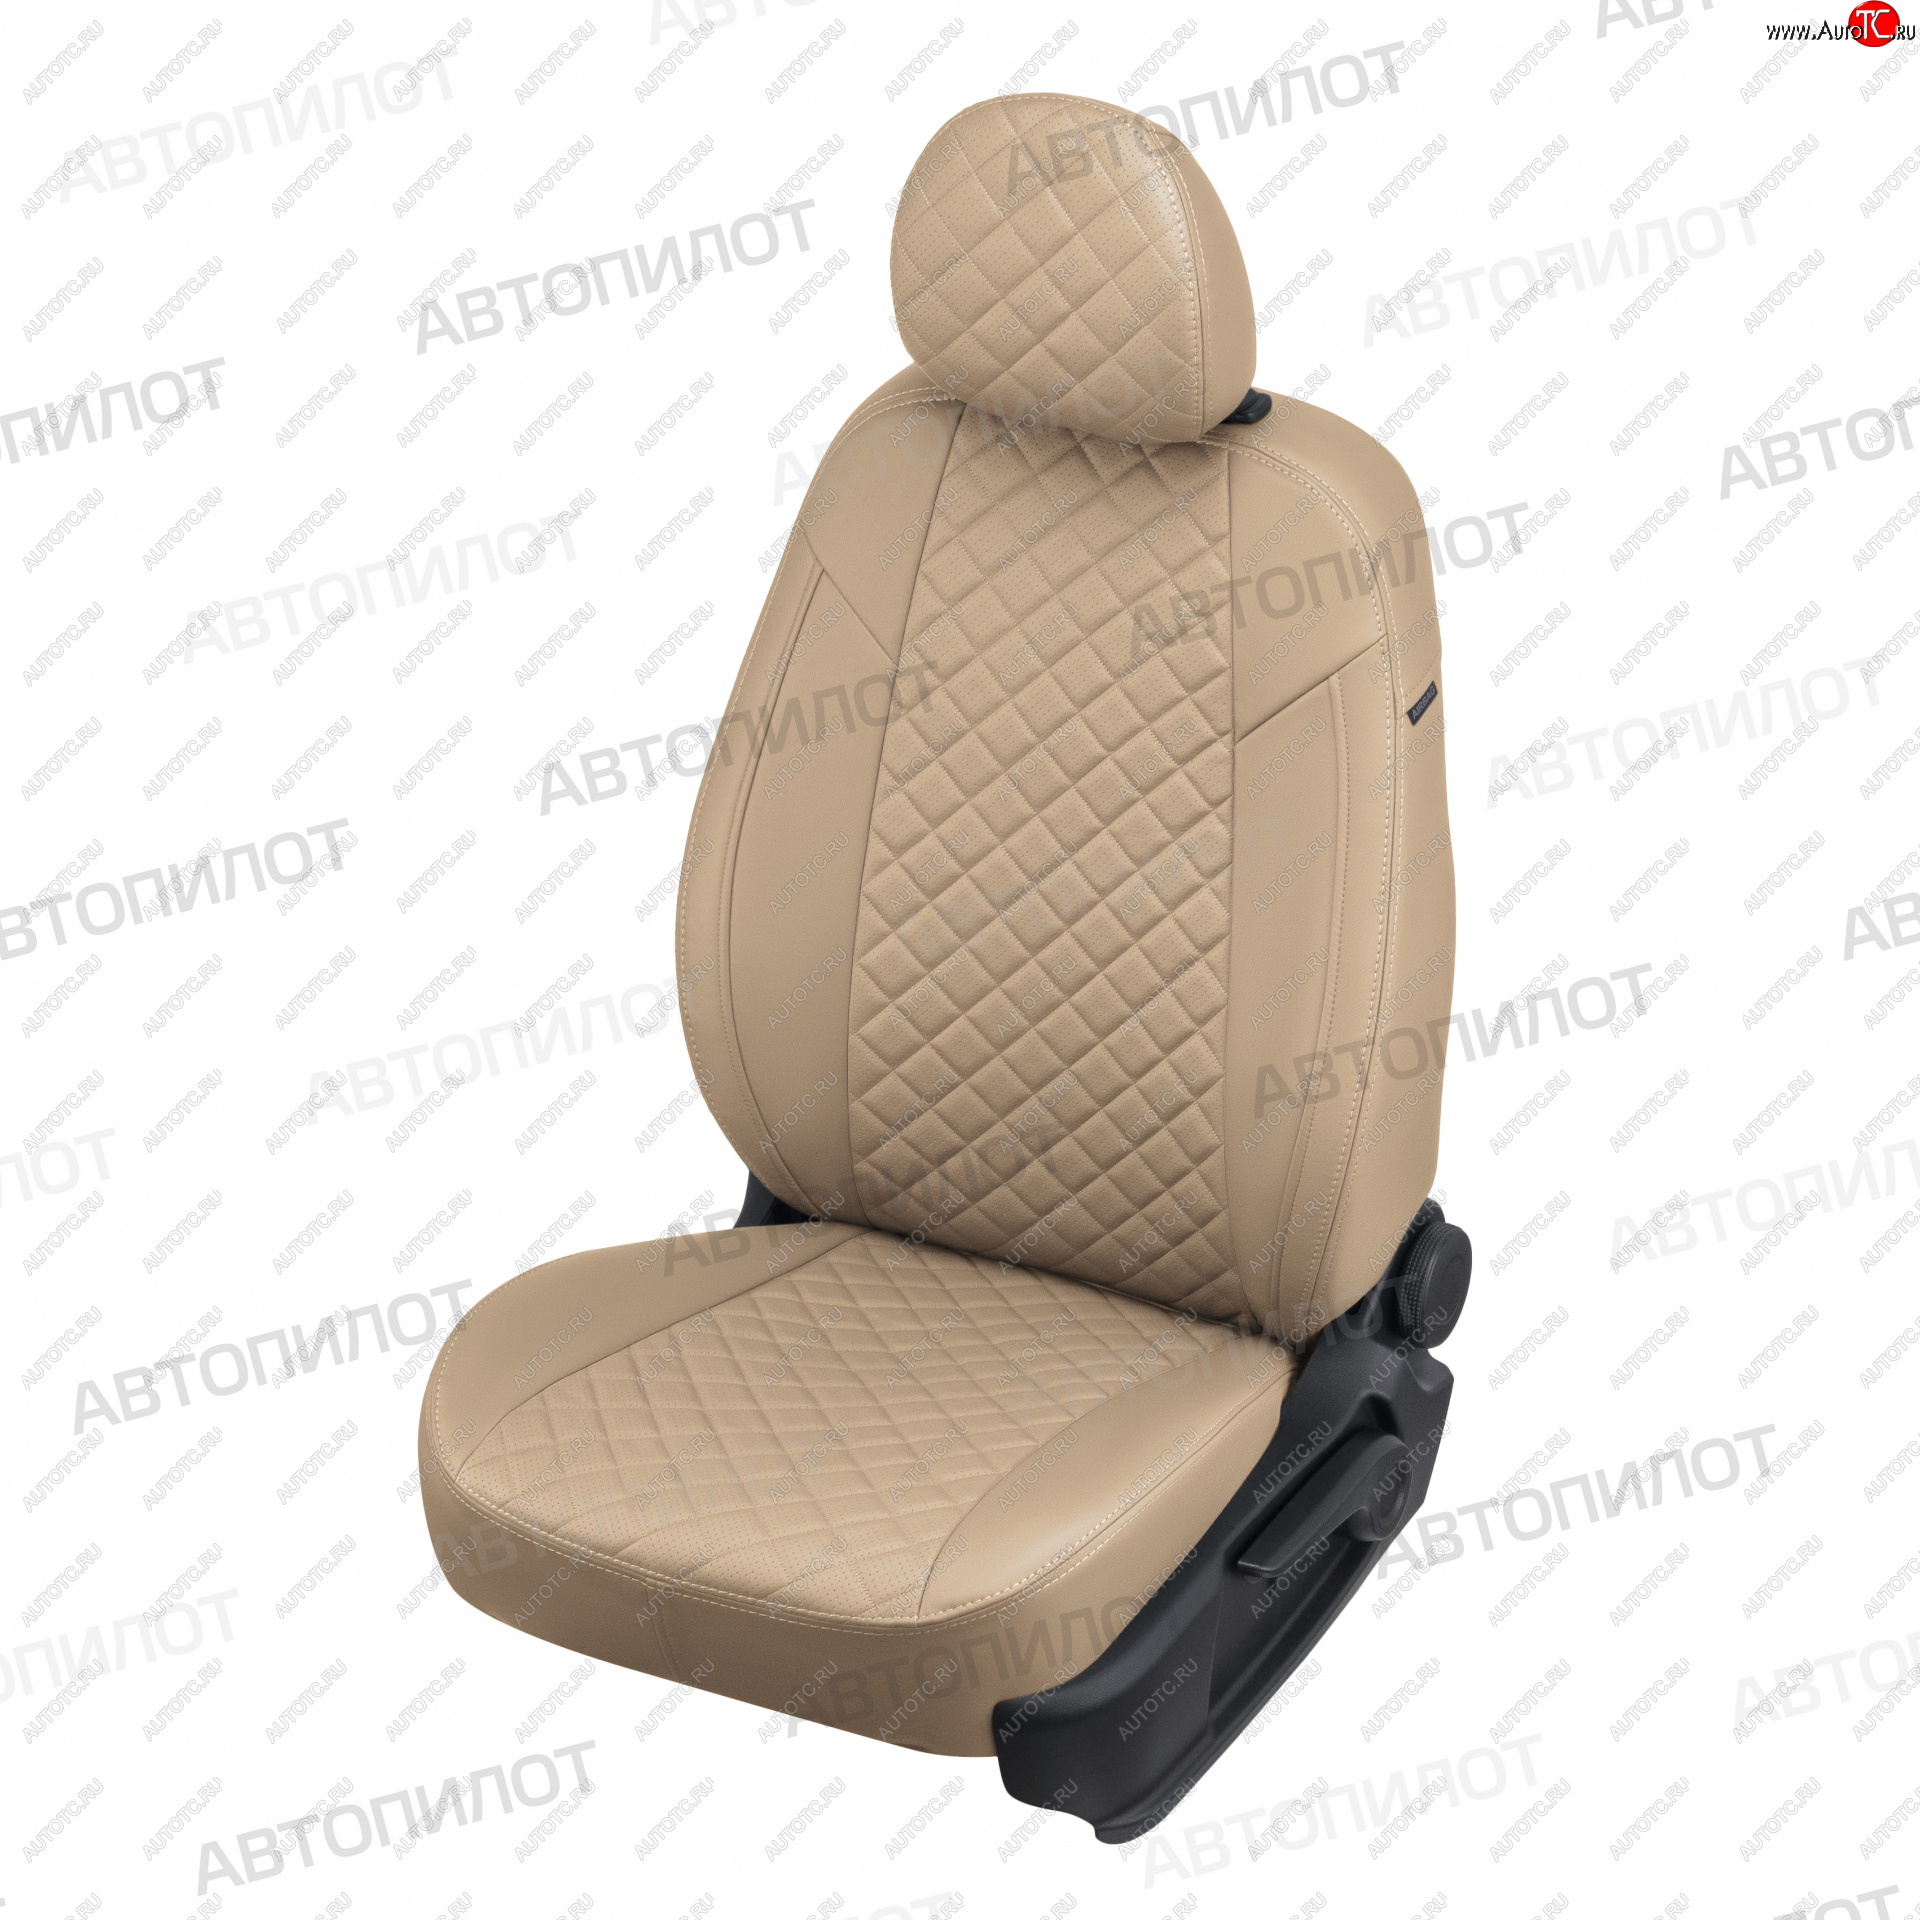 13 999 р. Чехлы сидений (экокожа) Автопилот Ромб  Hyundai I40  1 VF (2011-2019) (темно-бежевый)